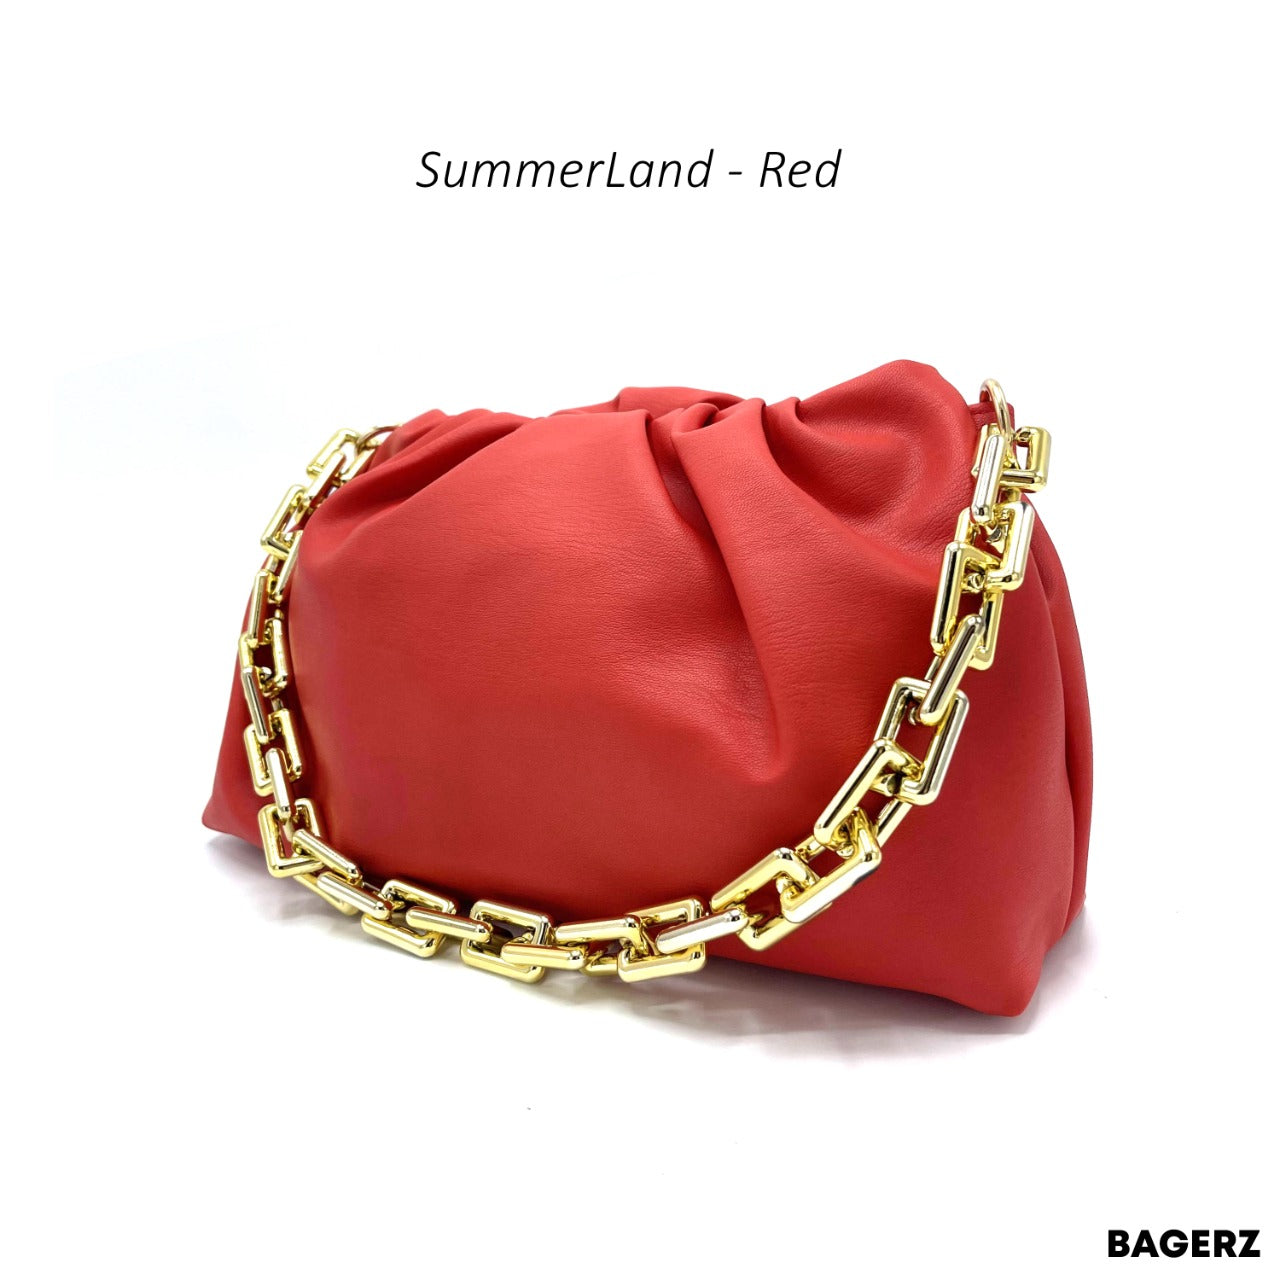 Summer Land - Red